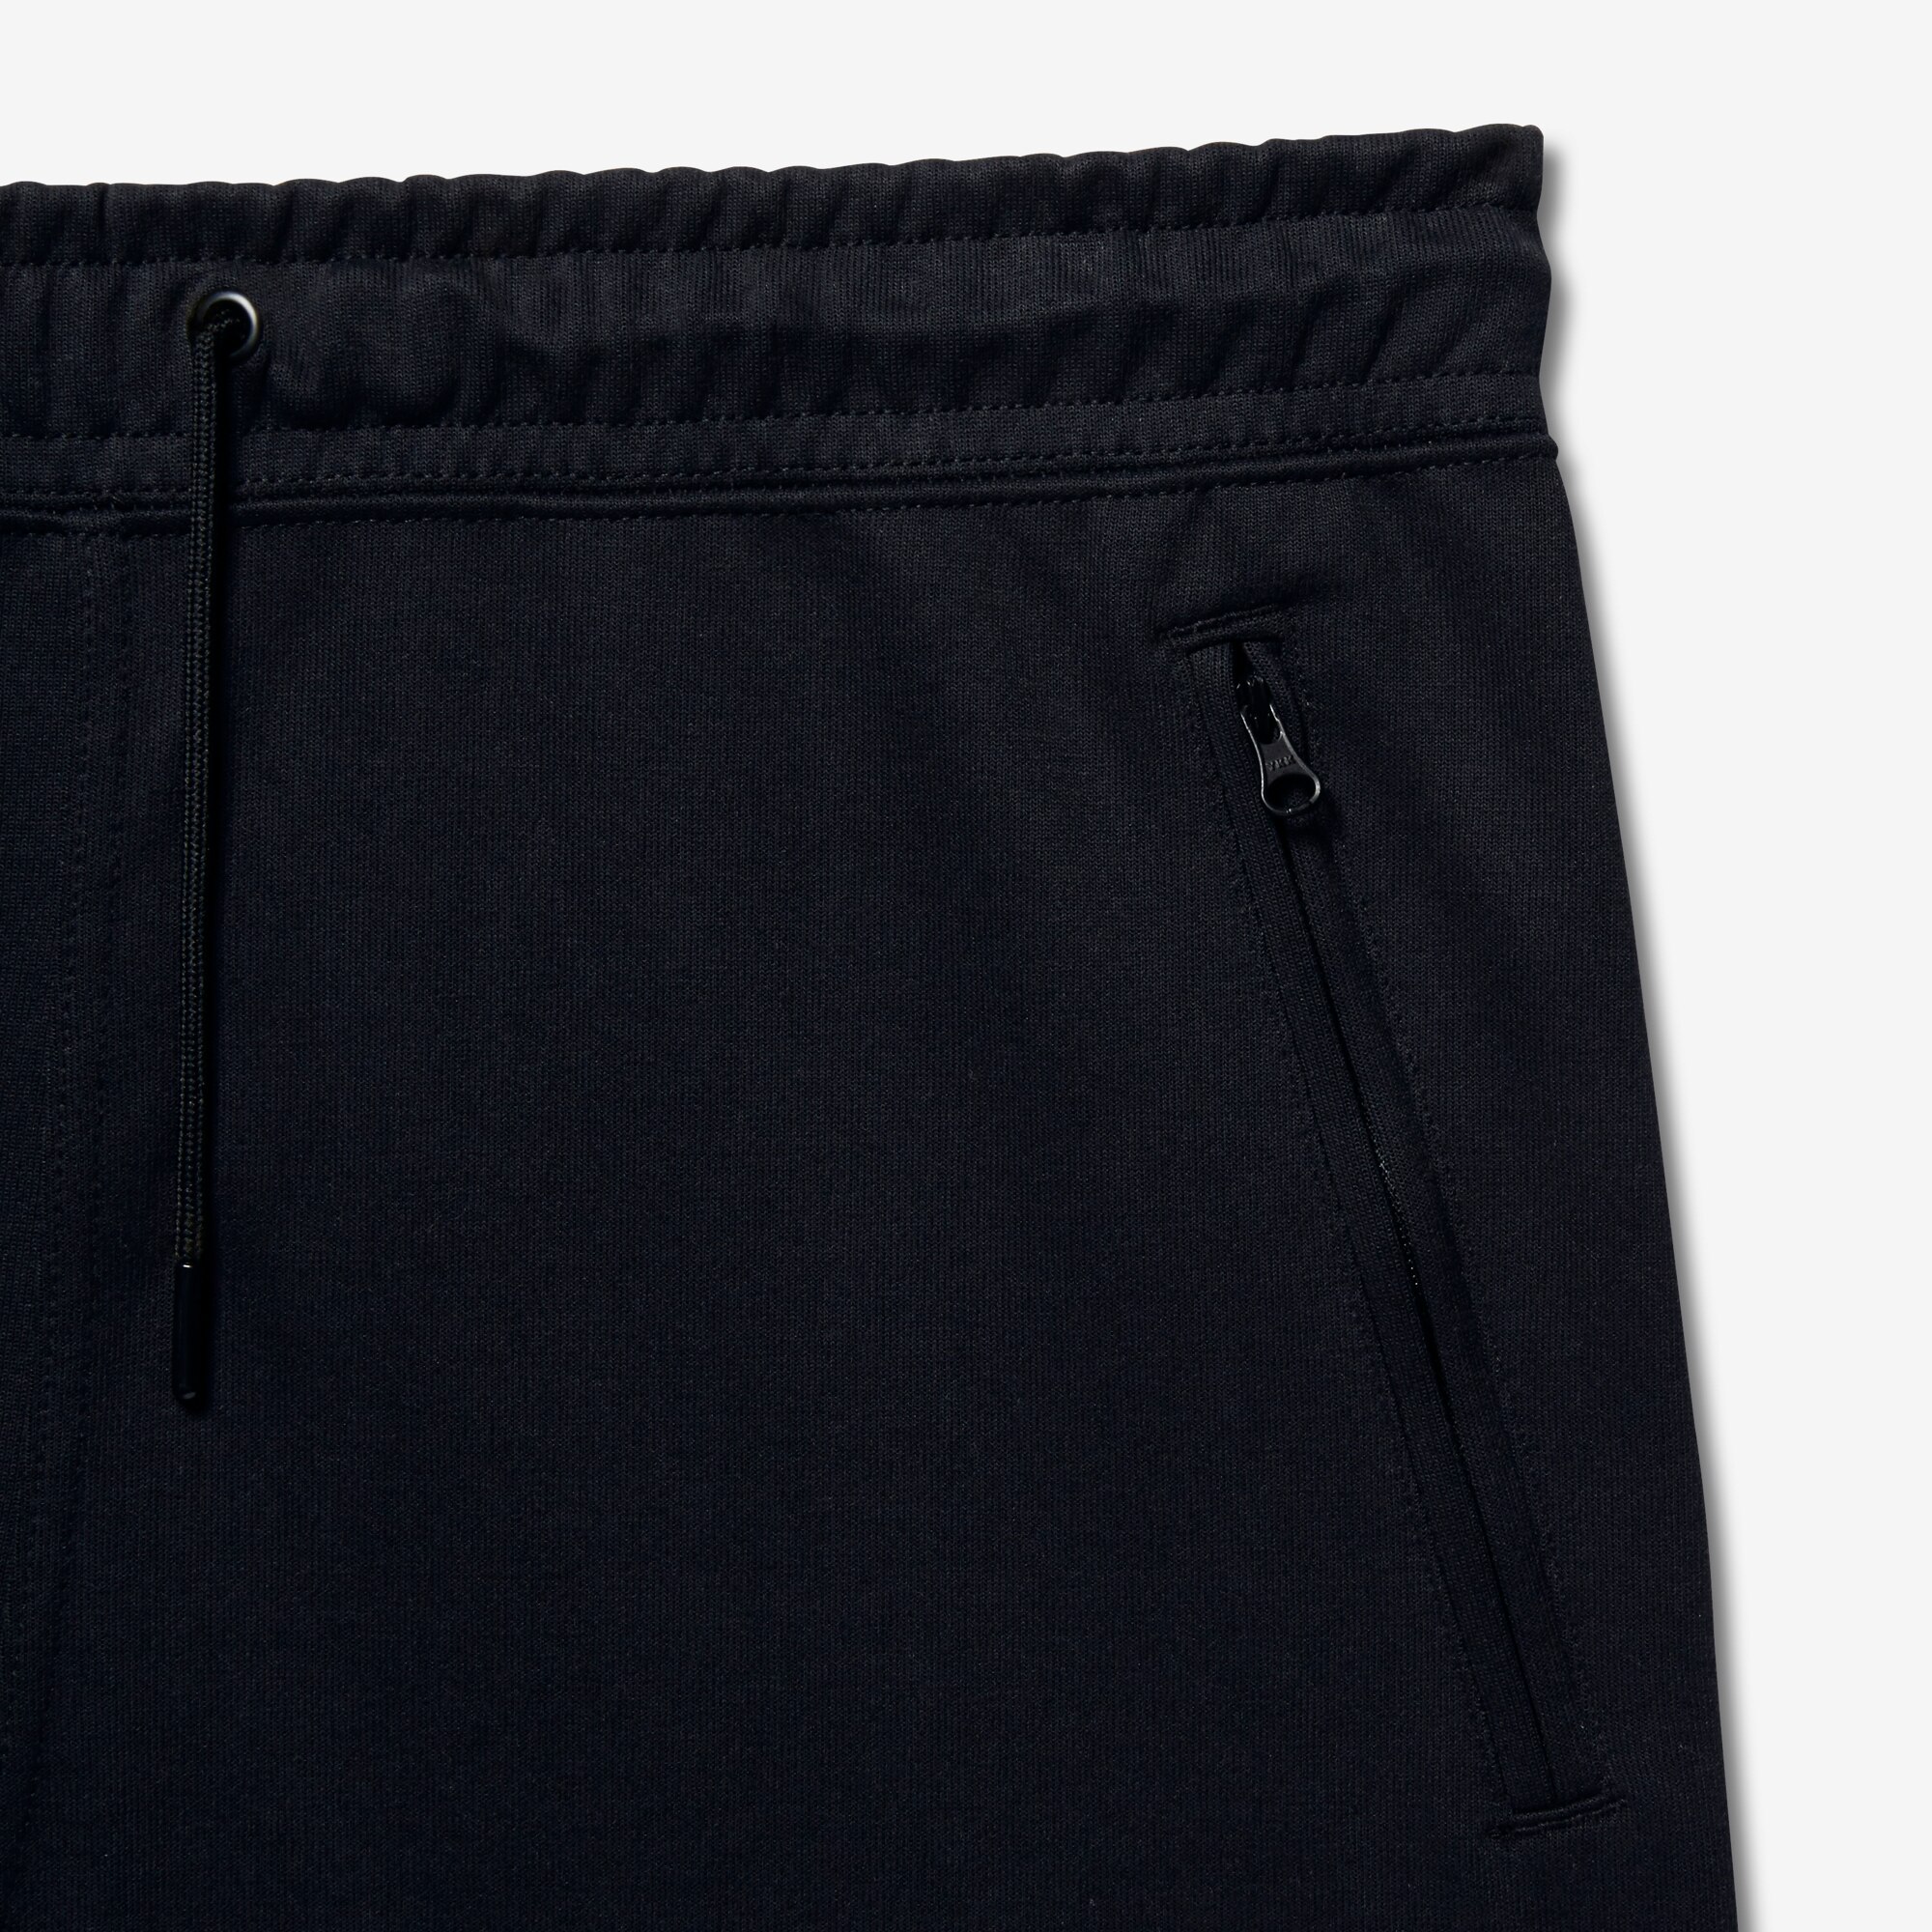 Pantaloni Nike Advance 15 pentru barbati, Black, XXL 